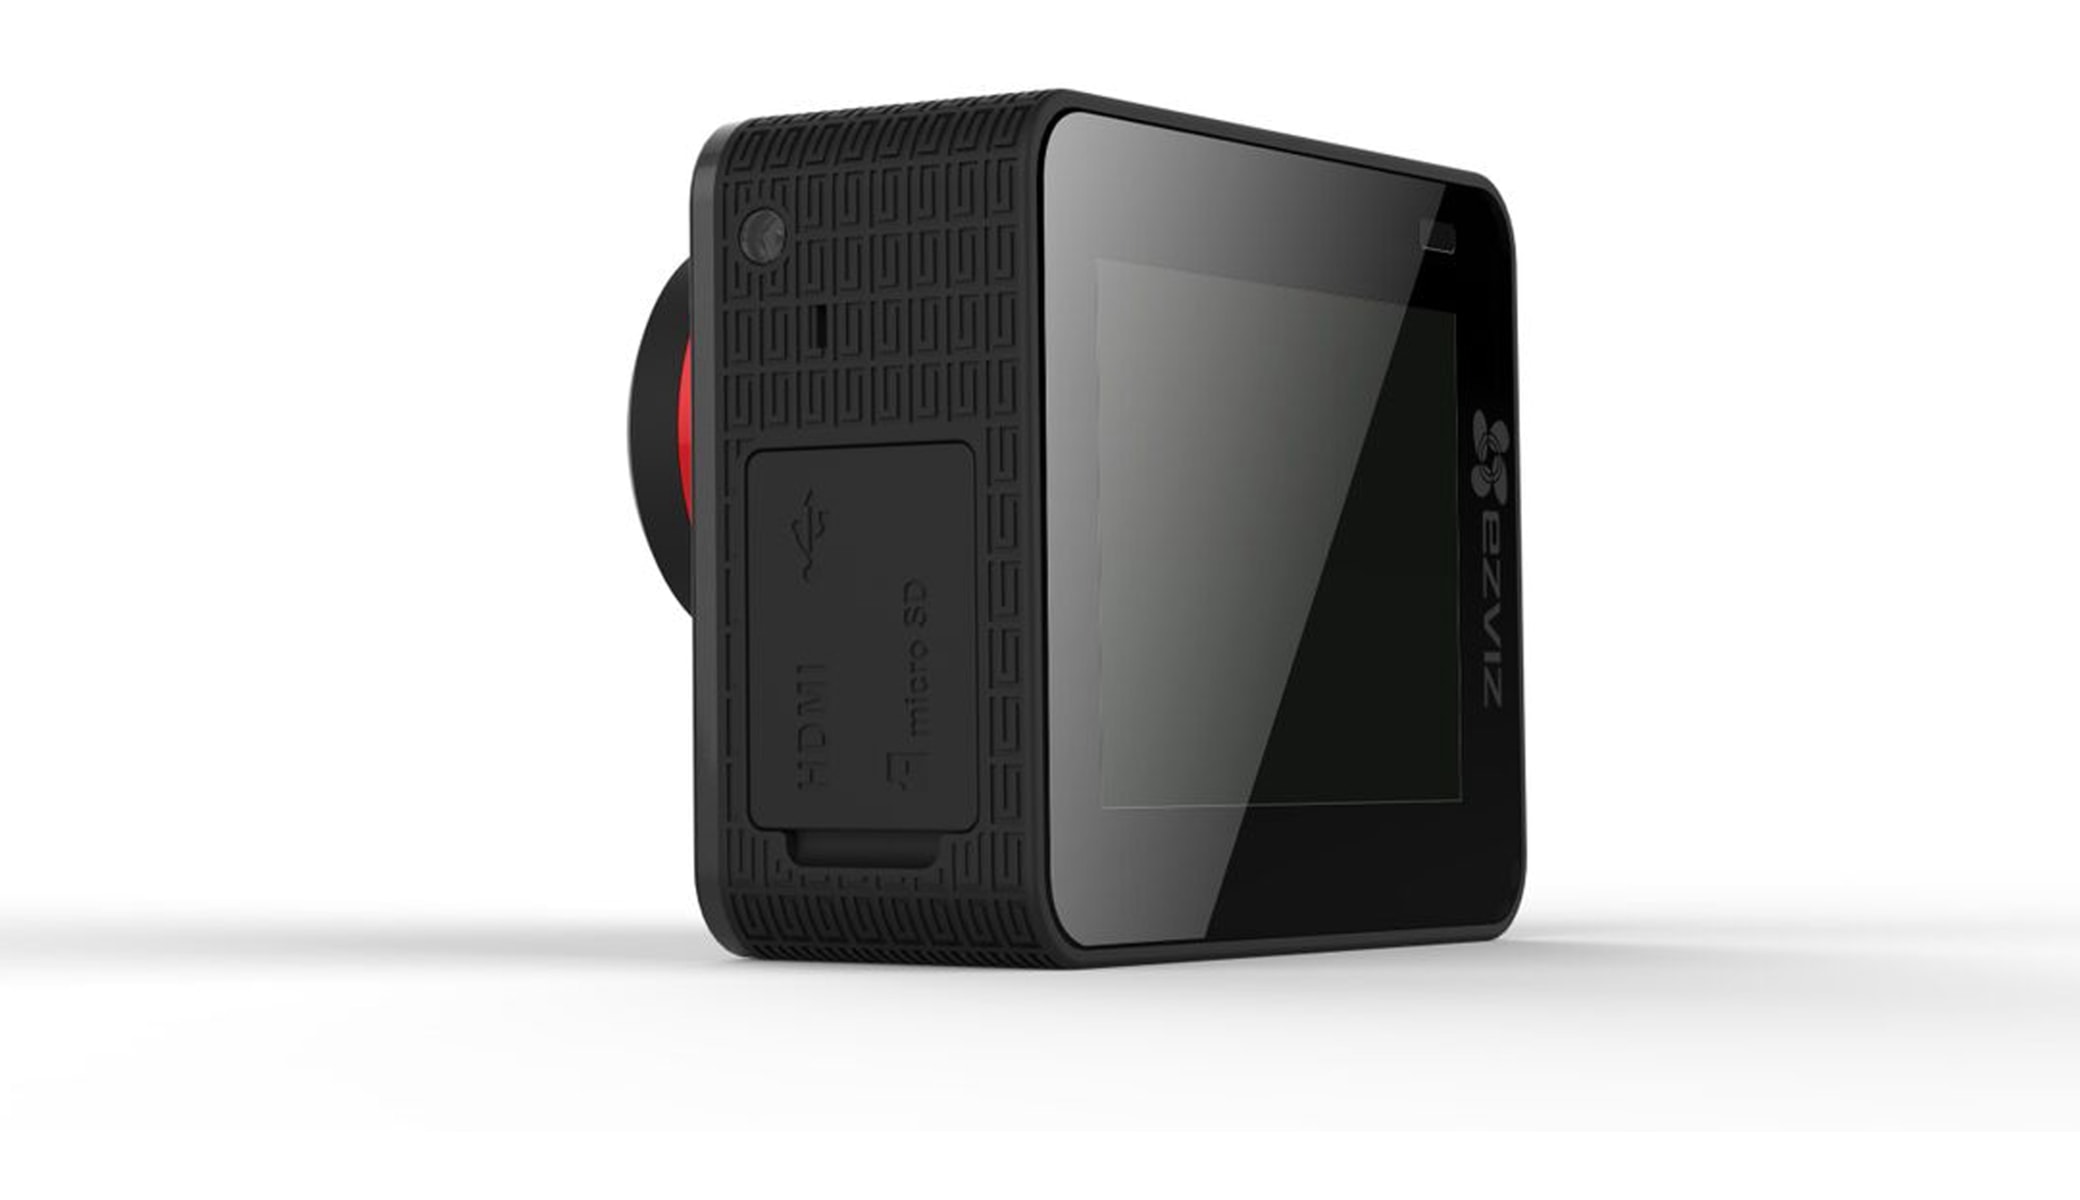 Ezviz Action-Kamera S5 Plus, 4K, 12 MP, WLAN, Bluetooth, Touchscreen